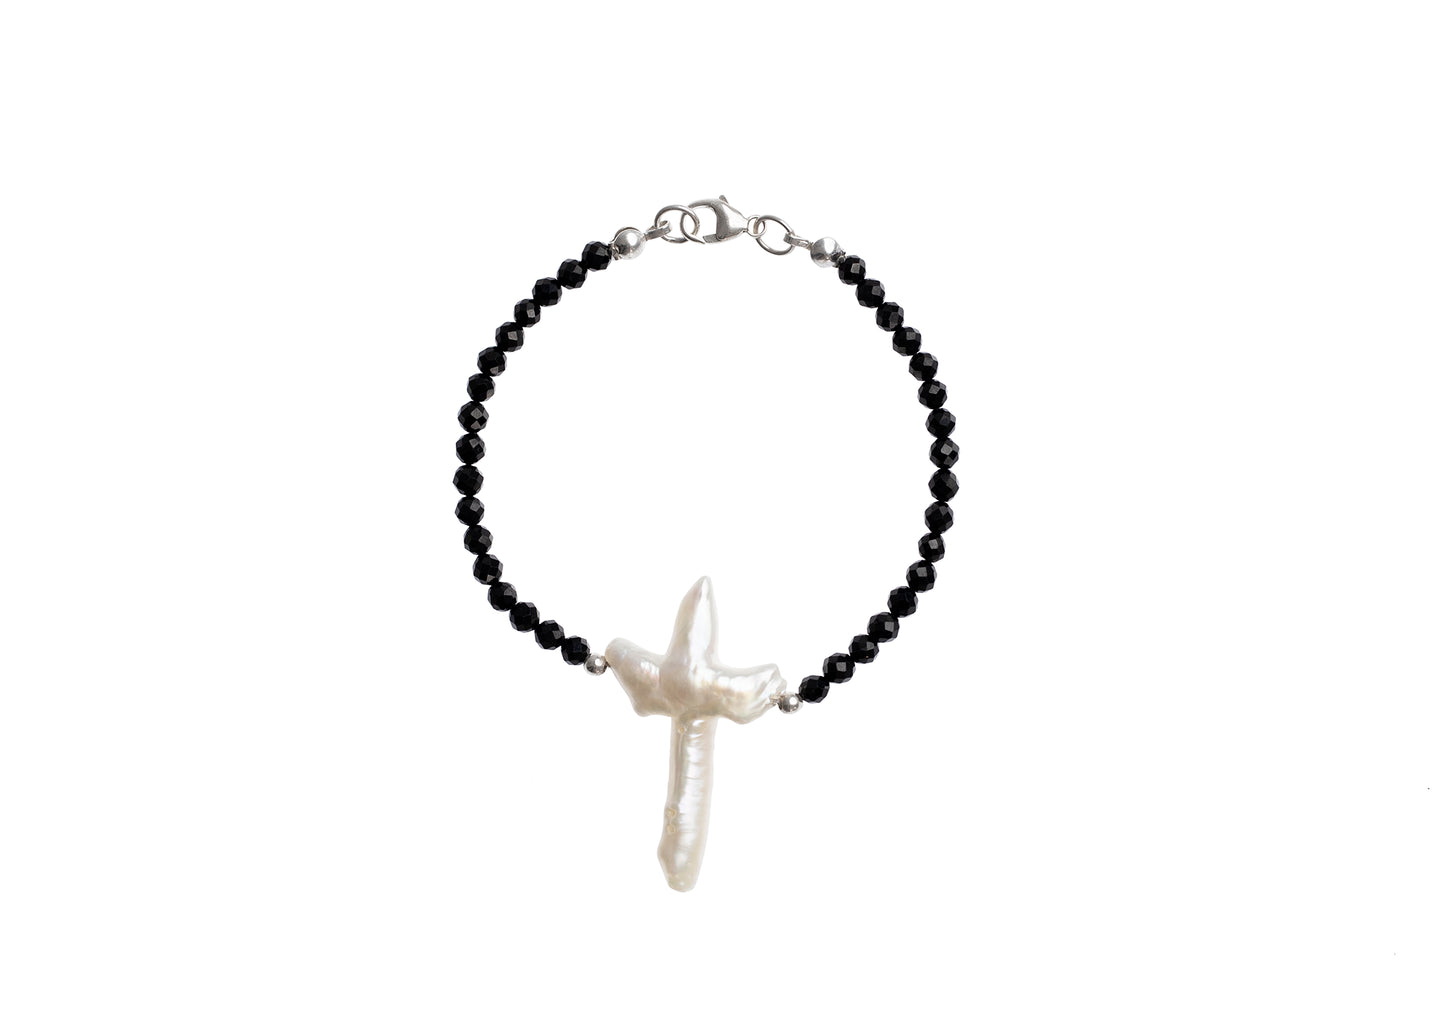 Oceana Onyx Bracelet Collection